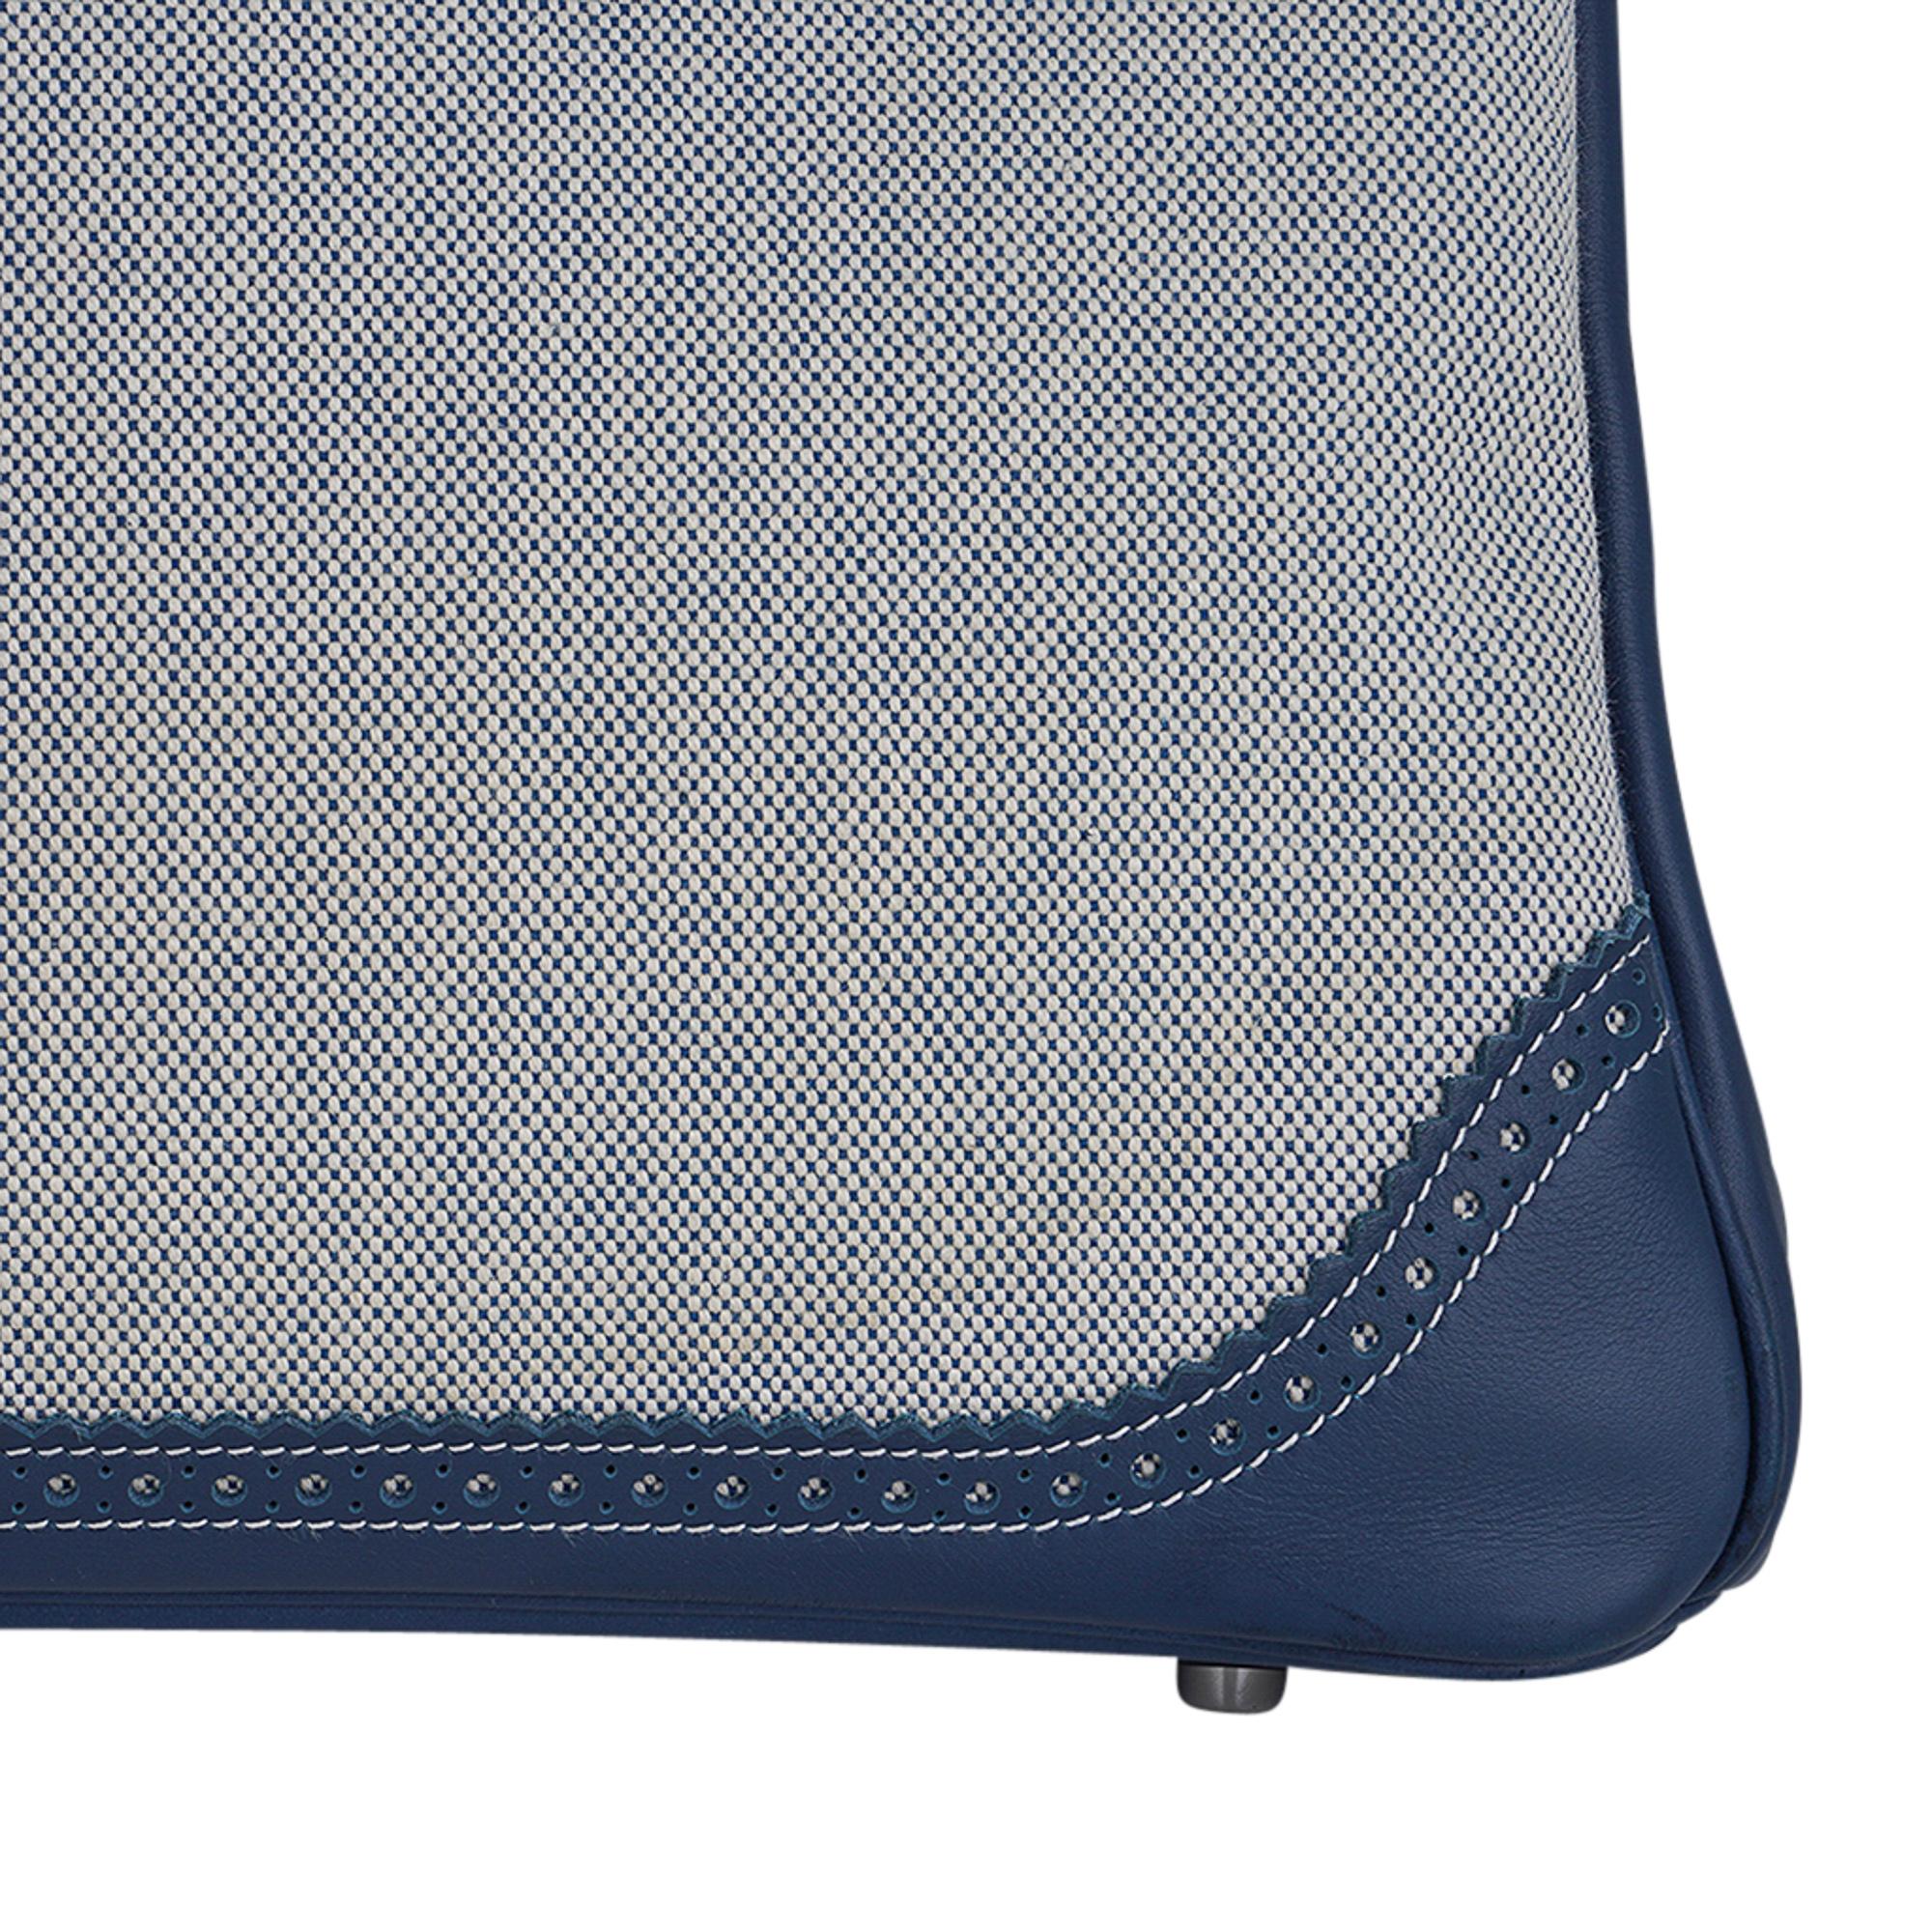 Hermes Birkin 40 Ghillies Blue de Prusse w/ Blue Toile Bag Limited Edition For Sale 2